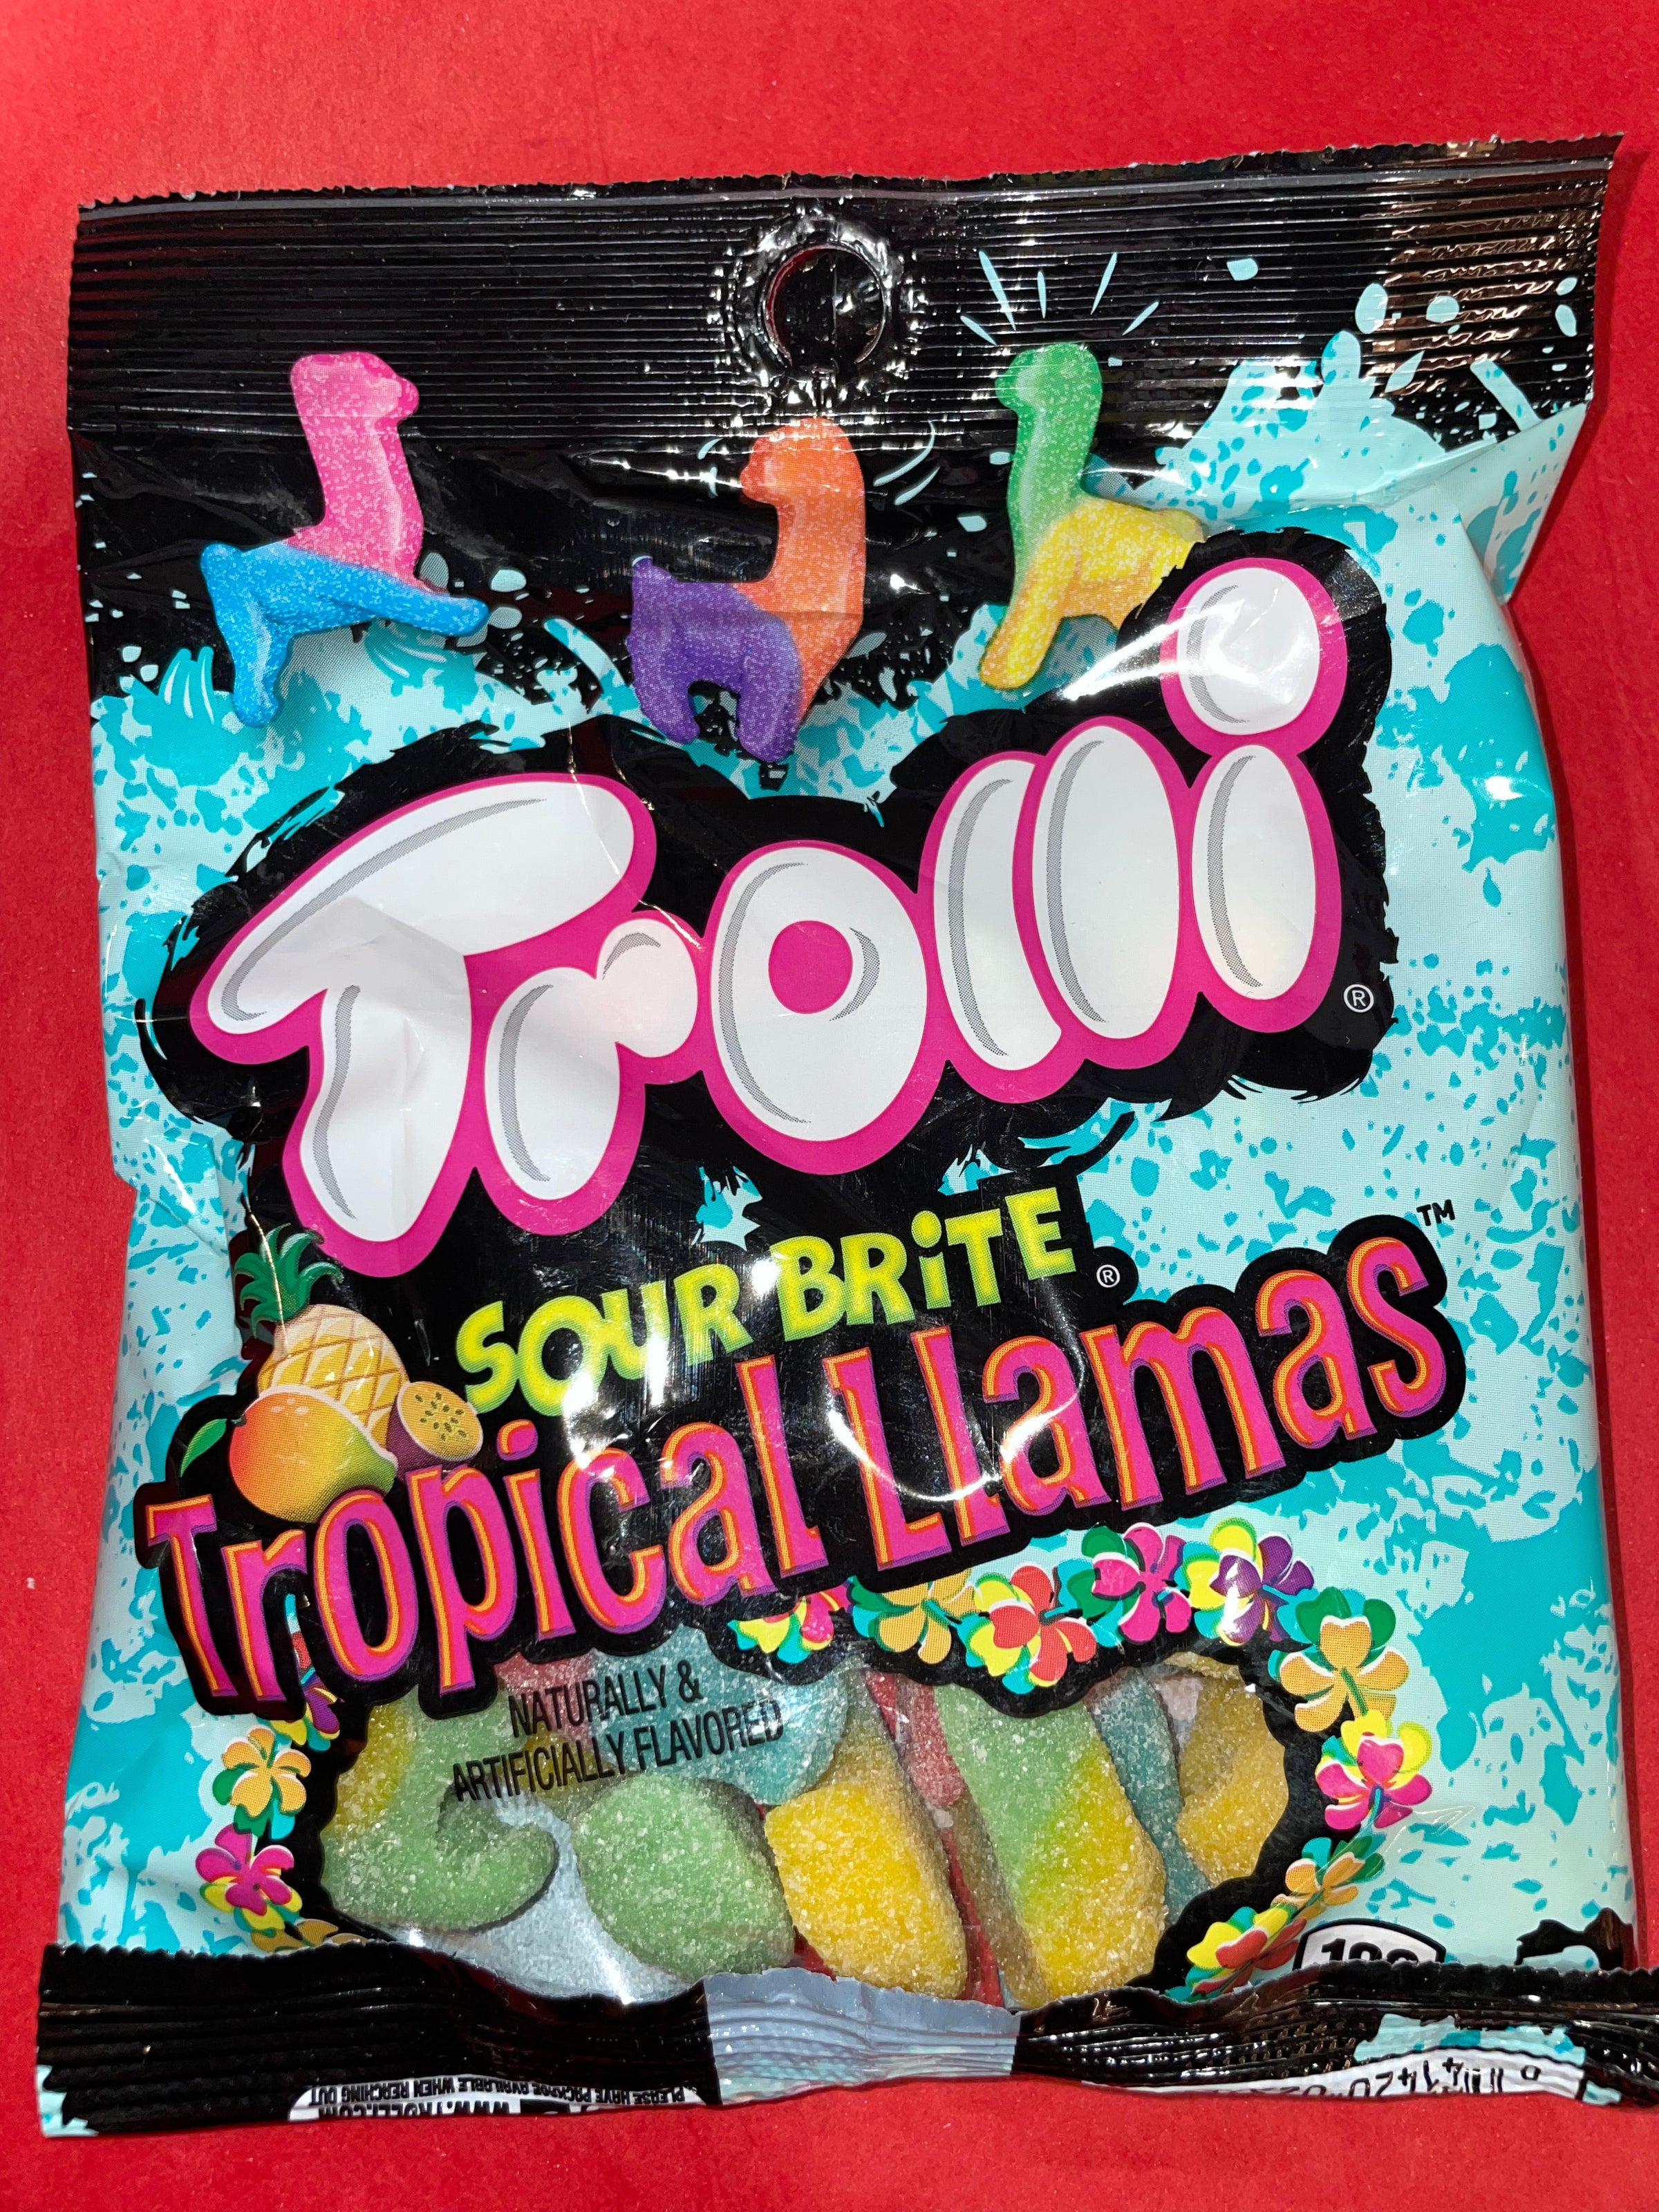 trolli sour gummy worms